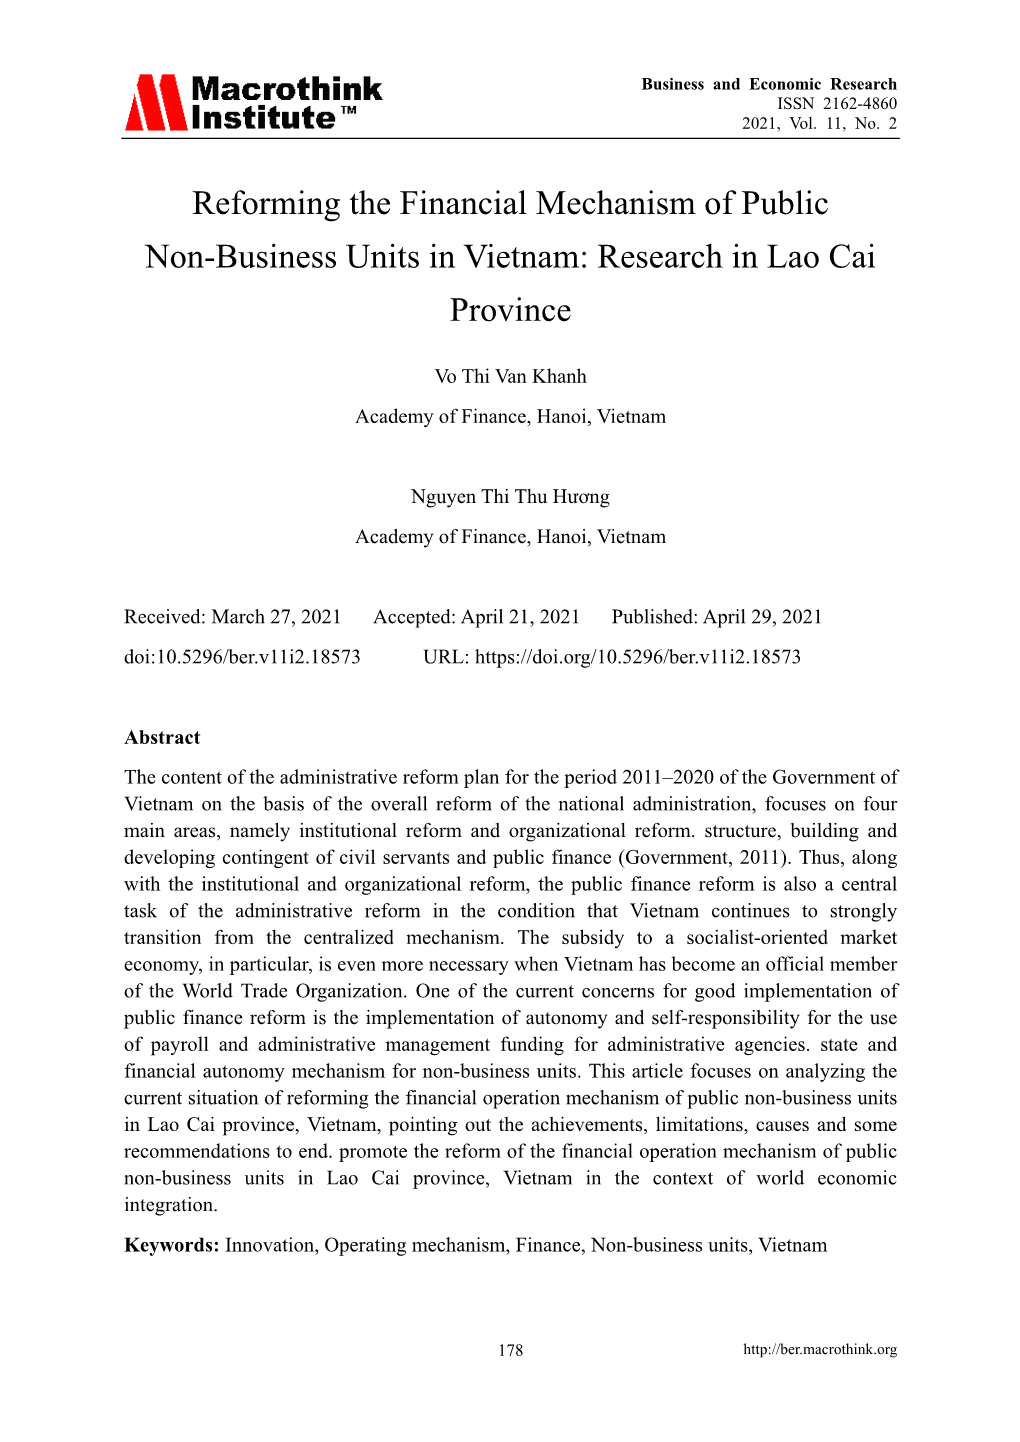 Research in Lao Cai Province